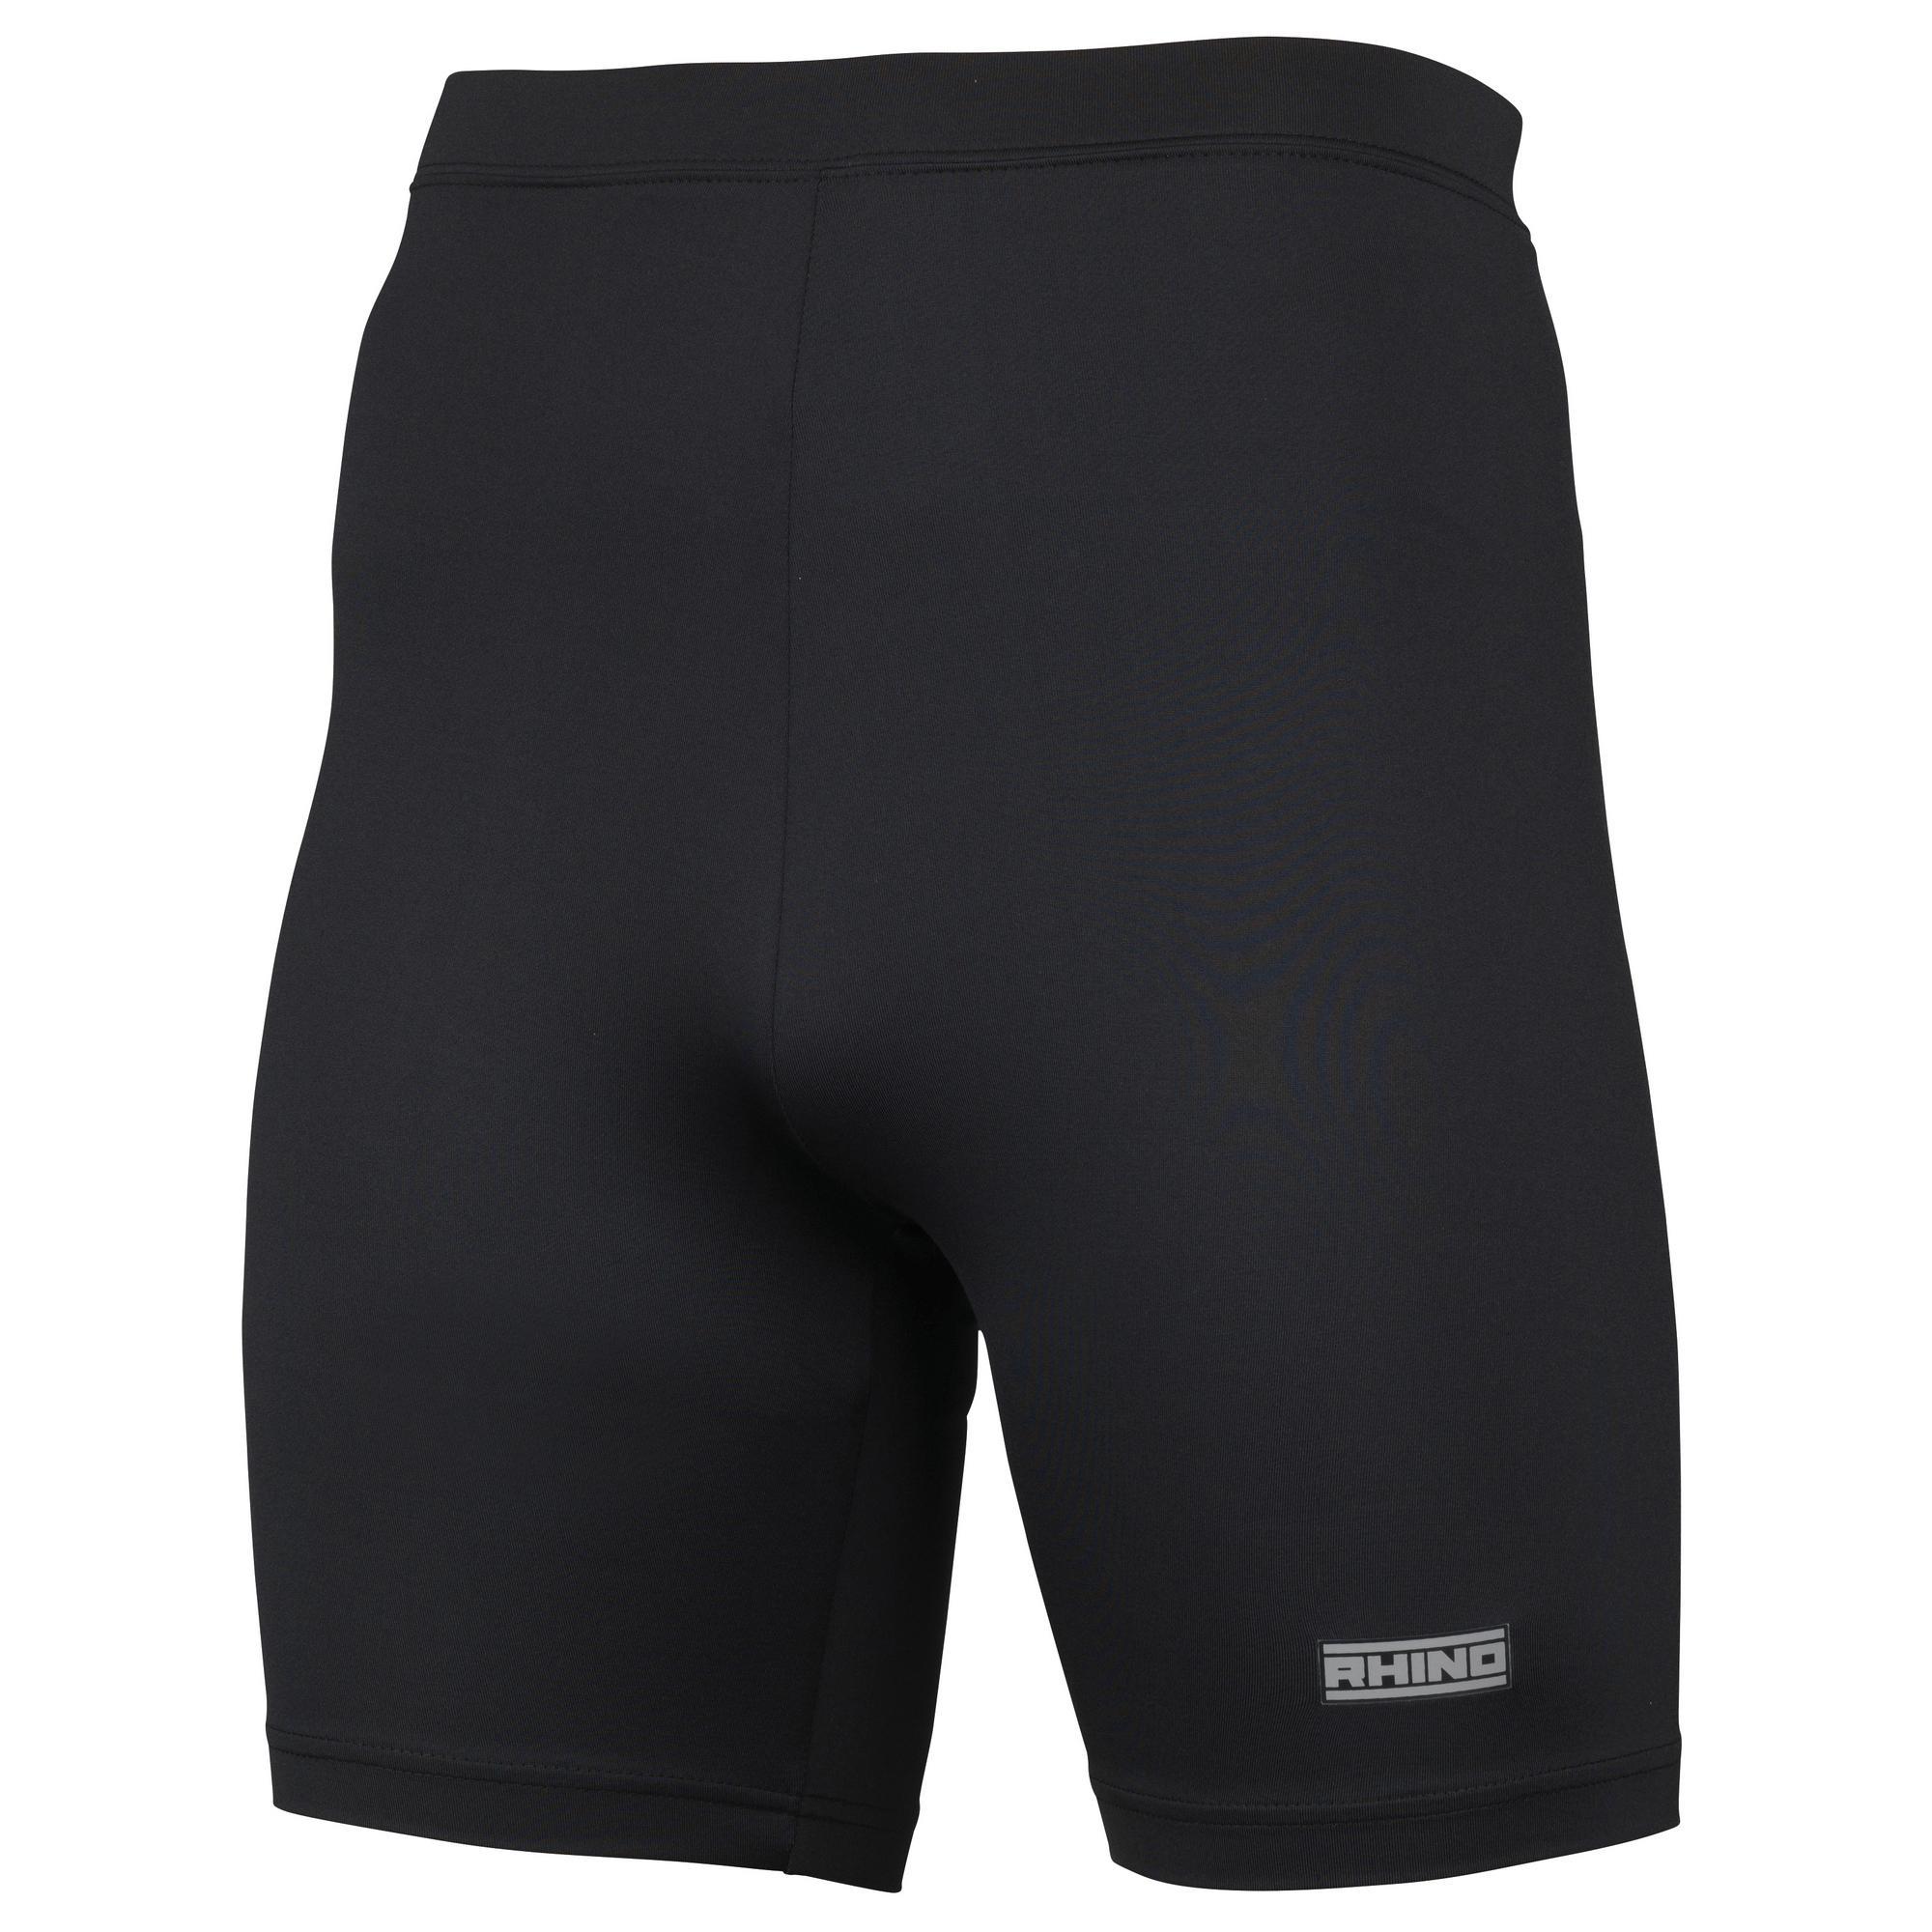 Rhino Mens Sports Base Layer Shorts (Black) (XS)